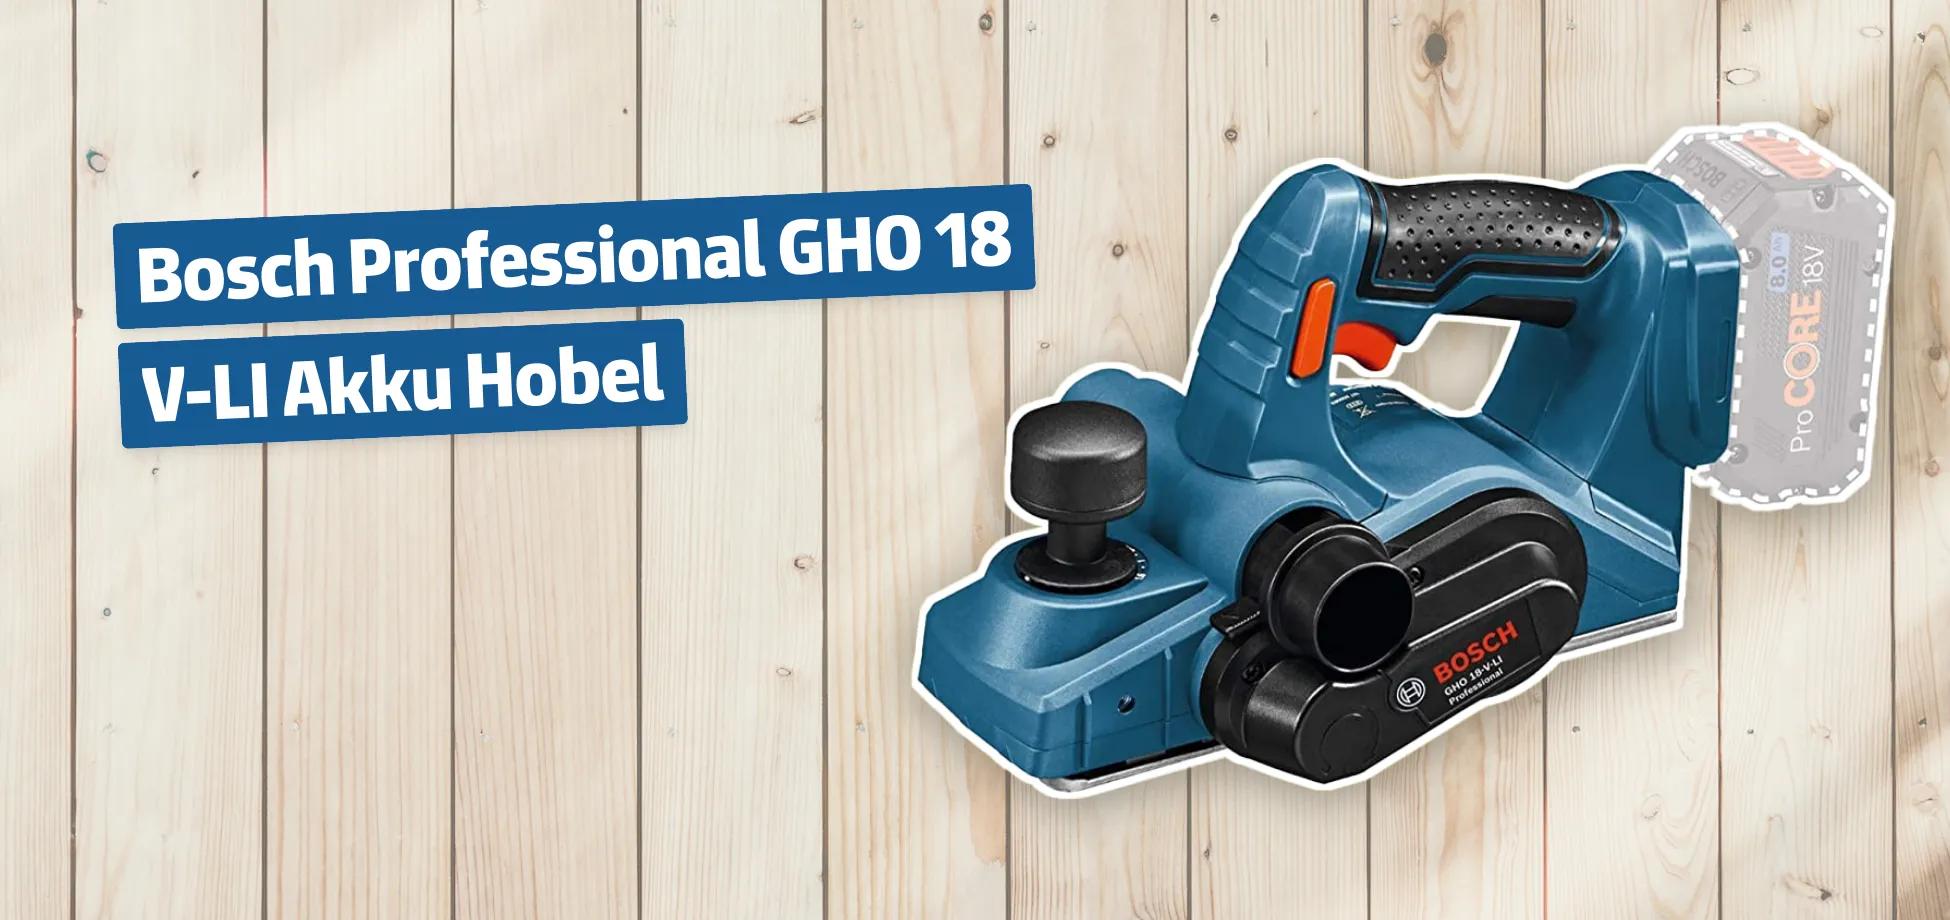 Bosch Professional GHO 18 V-LI Akku Hobel